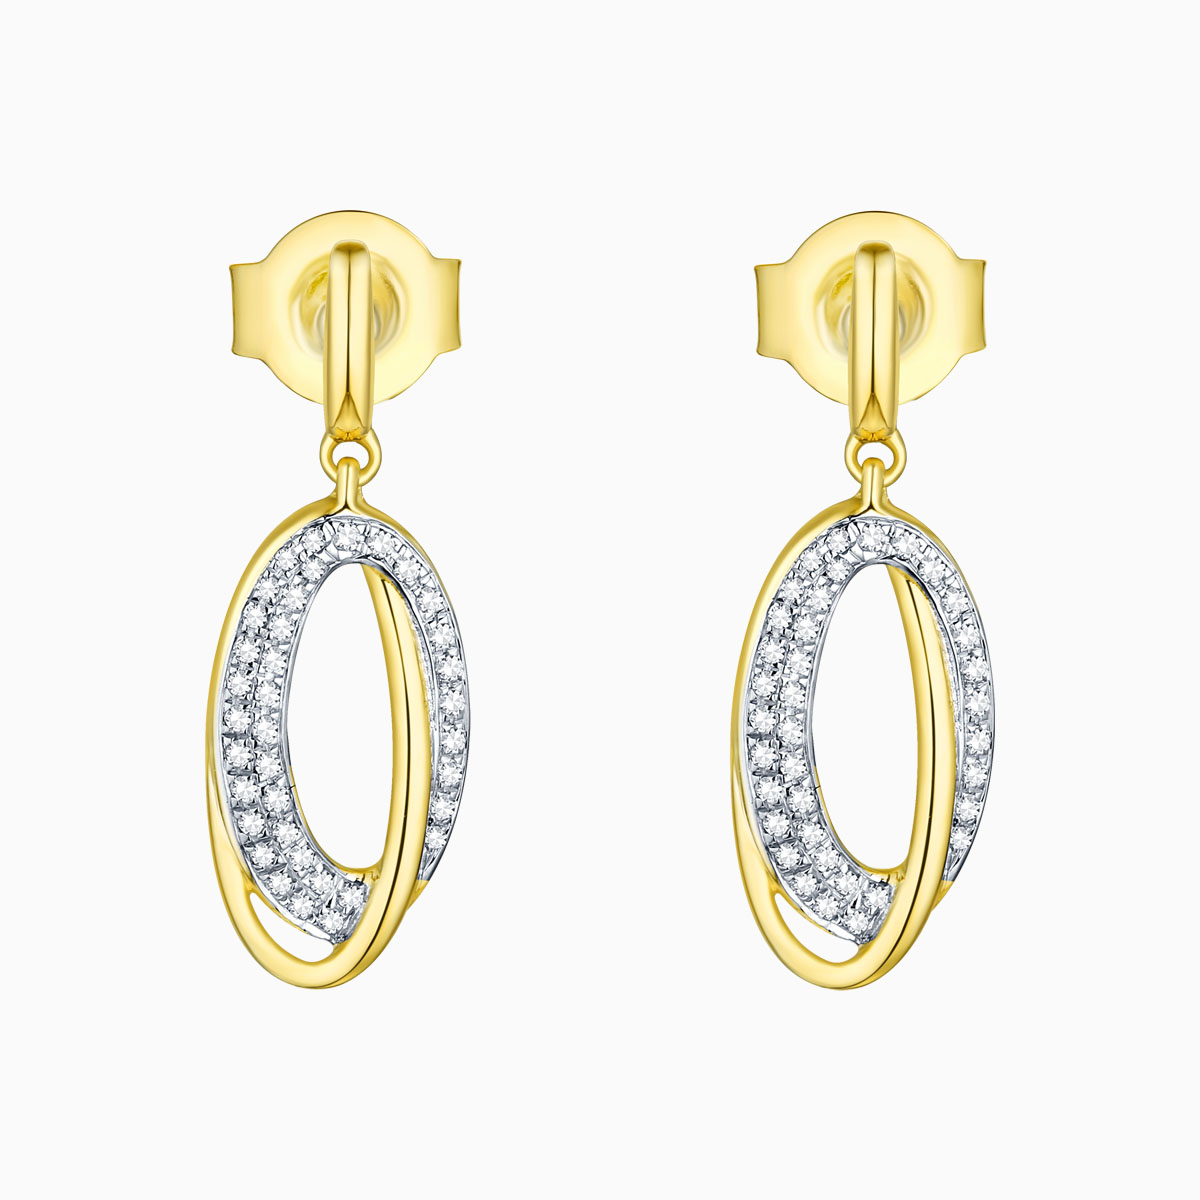 E13634WHT- 14K Yellow Gold Diamond Earrings, 0.11 TCW